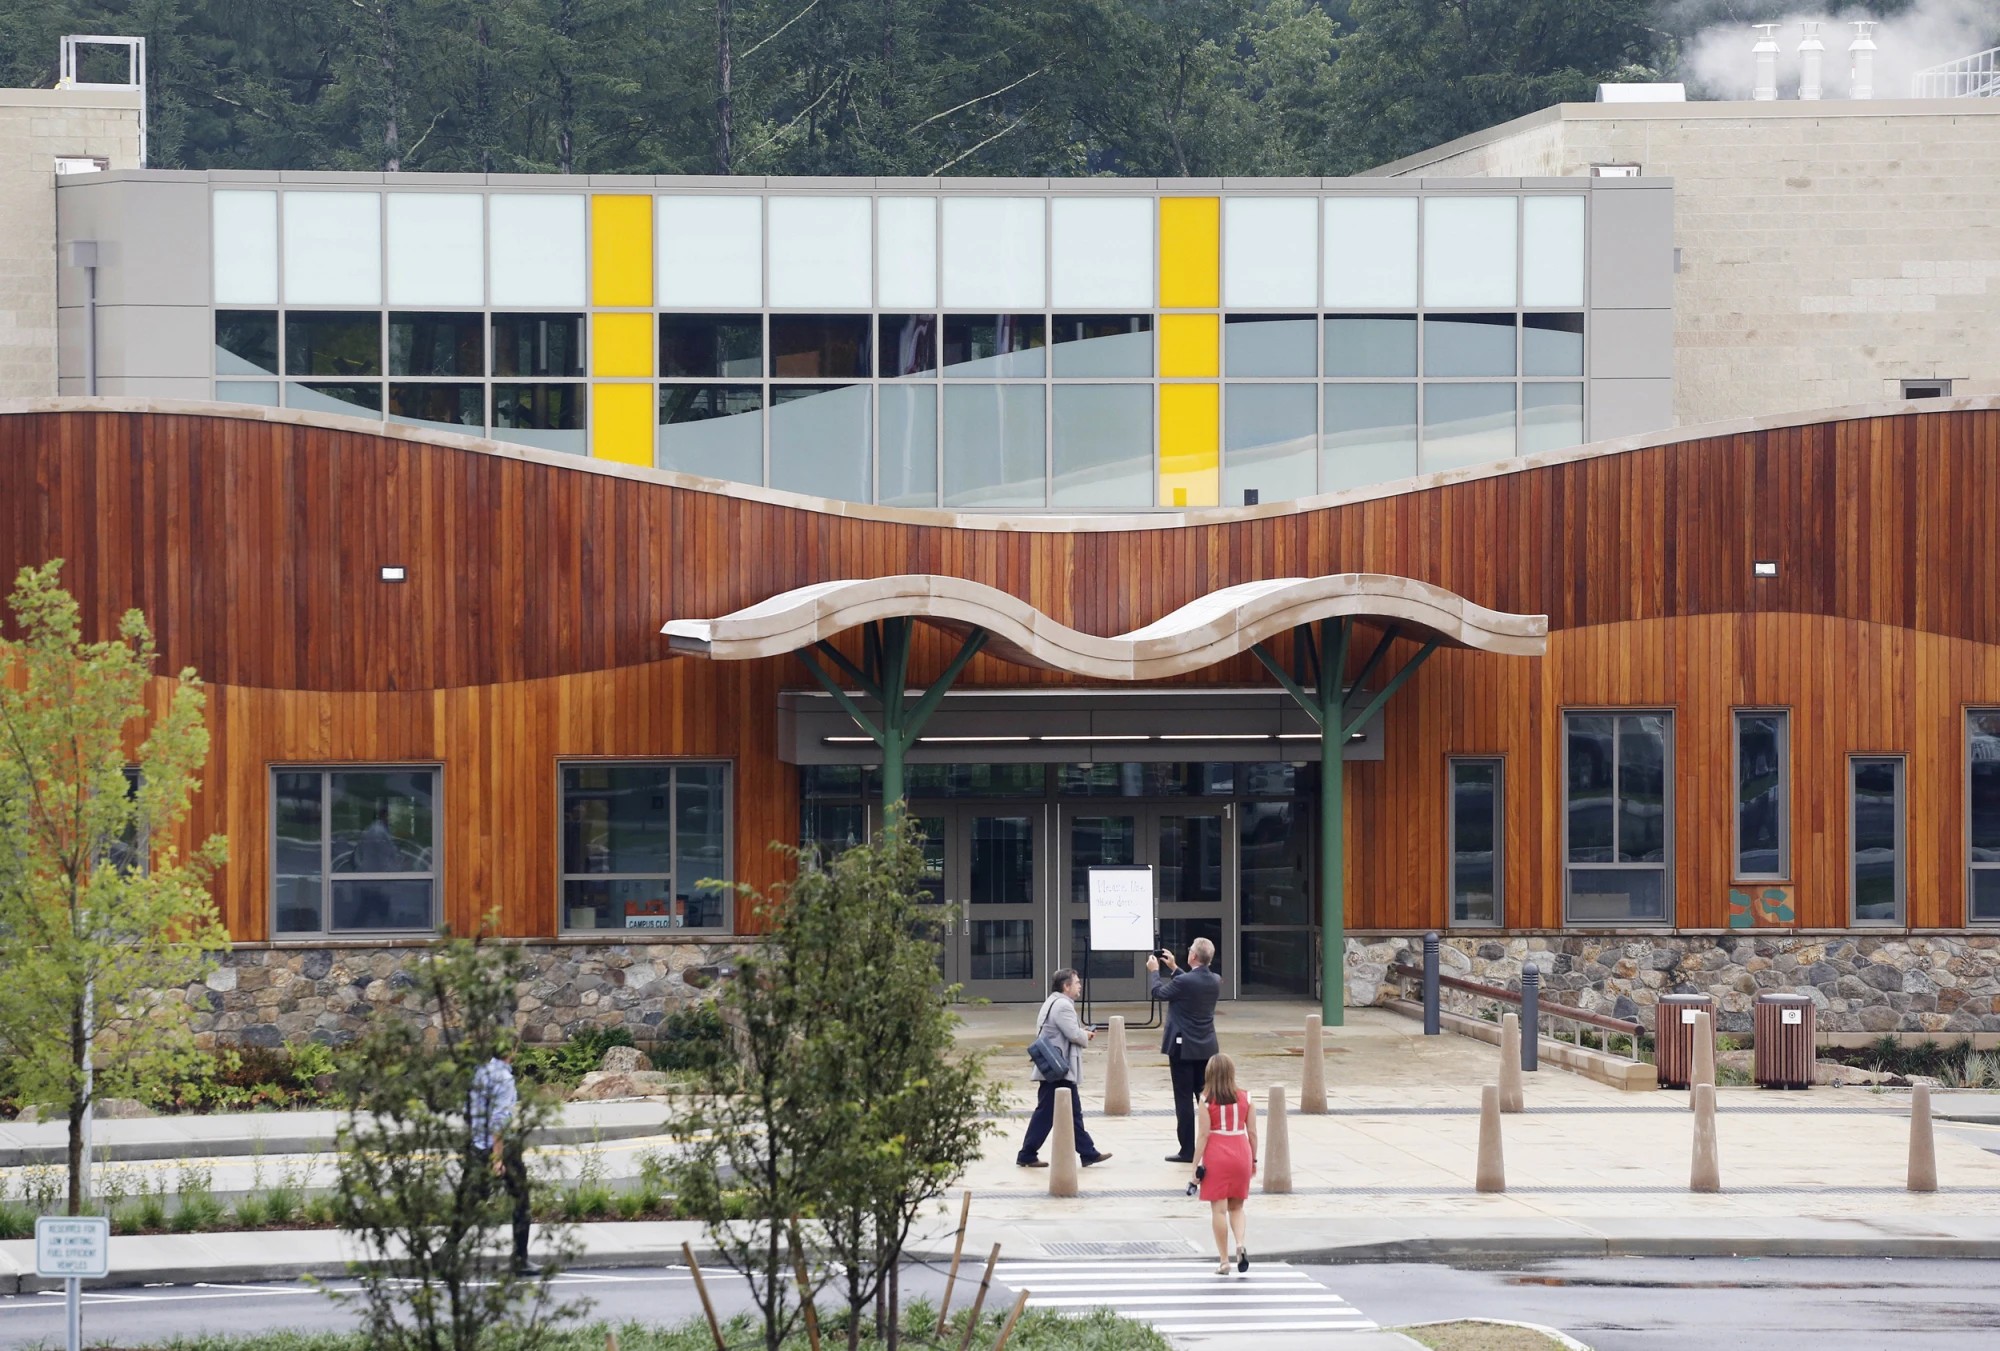 Фасад новой школы «Сэнди-Хук». 29 июля 2016 года. Фото: Mark Lennihan / AP Photo